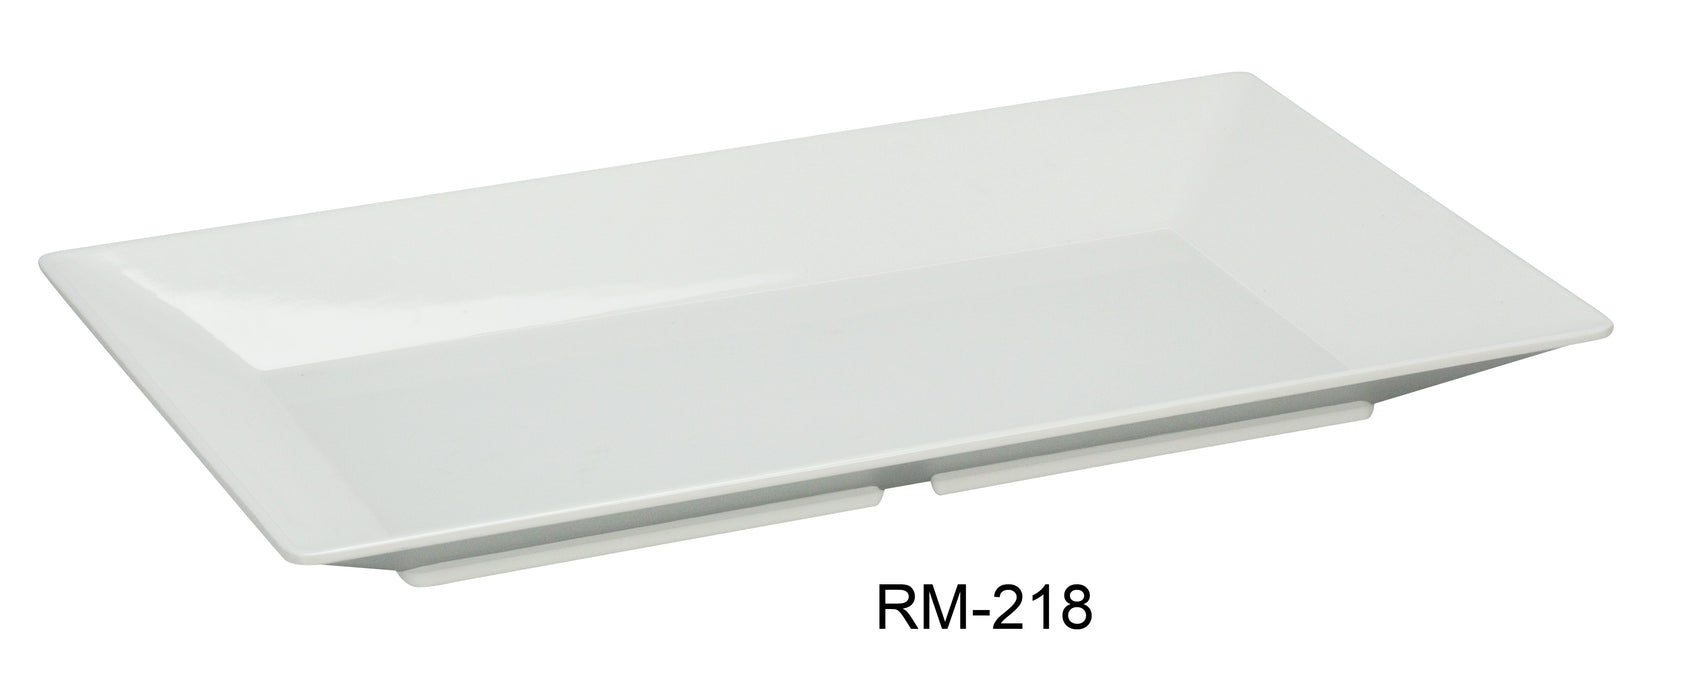 Yanco Rome RM-218 Rectangular Plate, Melamine, Pack of 12 (1 Dz)